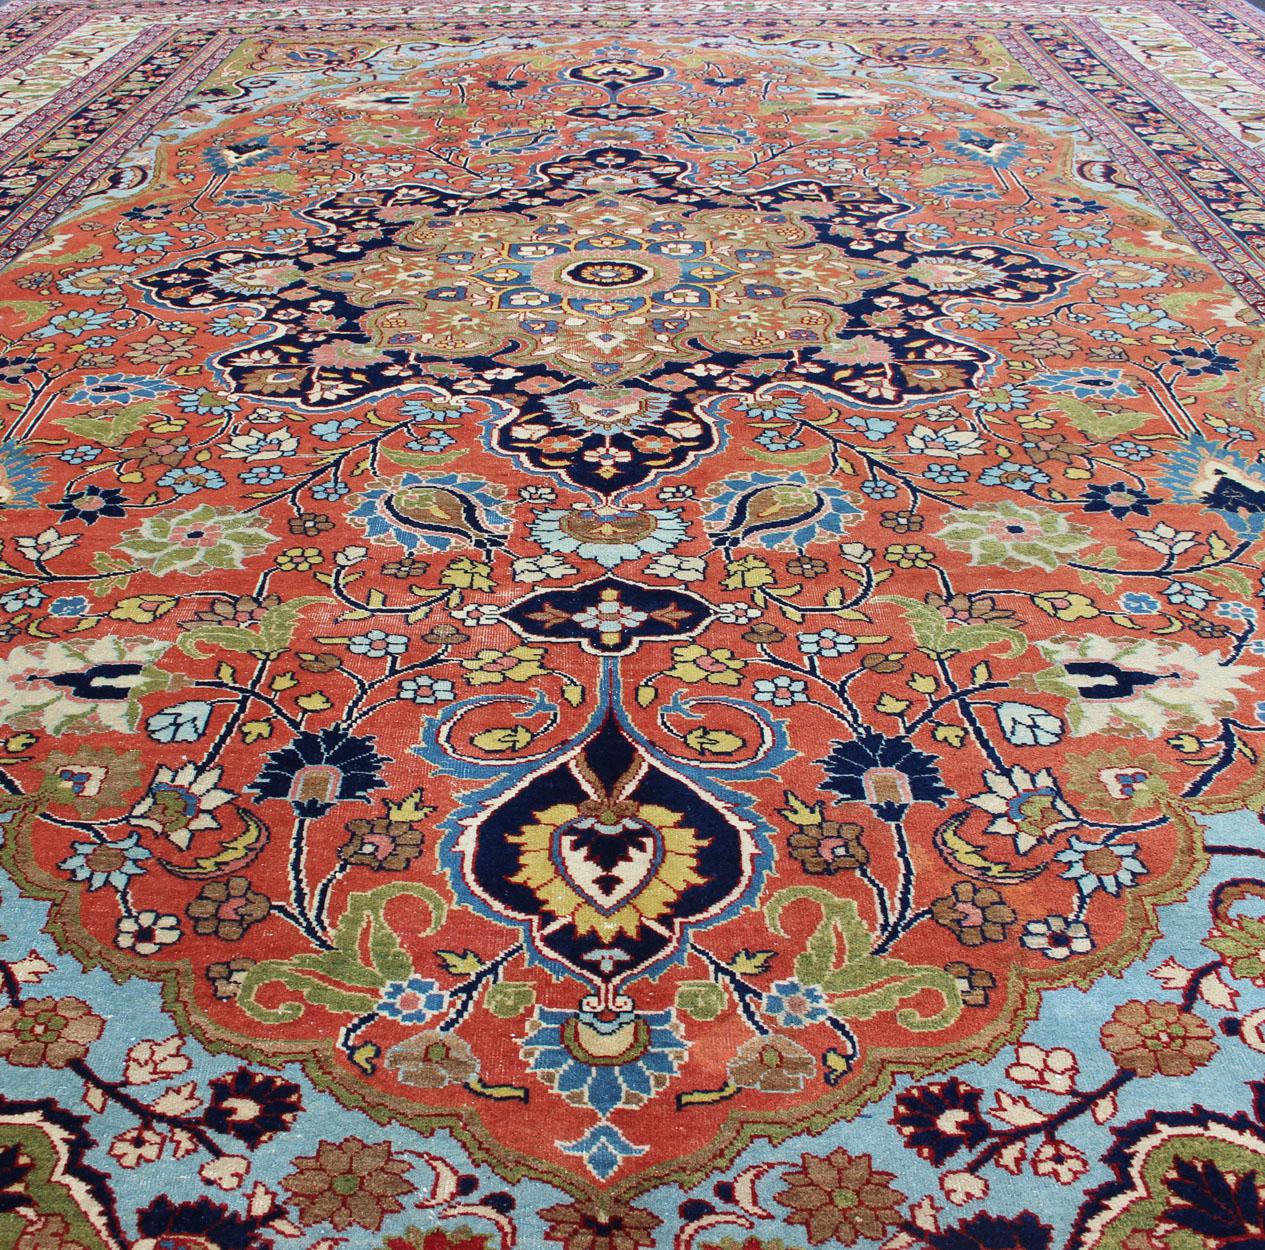 Antique Fine Persian Classic Design Tabriz Rug in Orange, Blue & Multi Colors For Sale 3